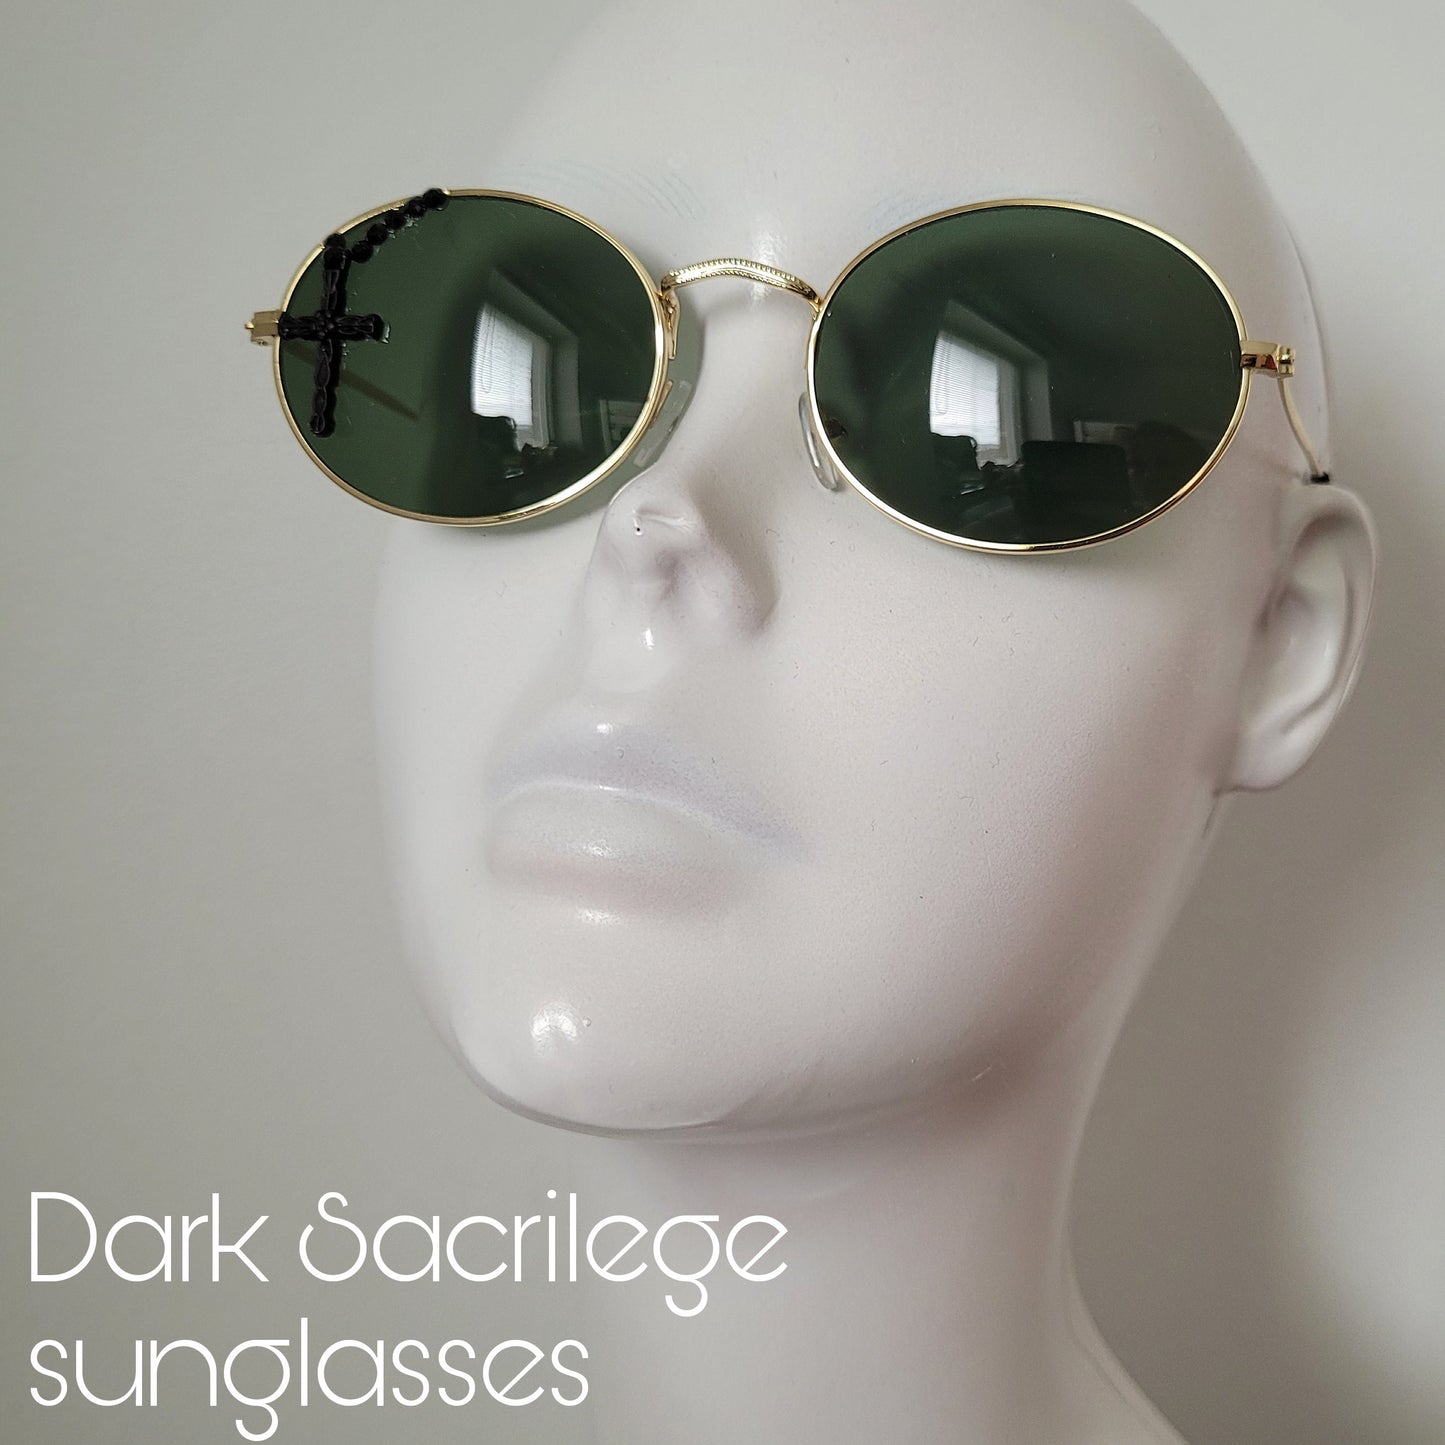 Sacrilegious Collection: The Dark Sacrilege sunglasses, oval unisex frames